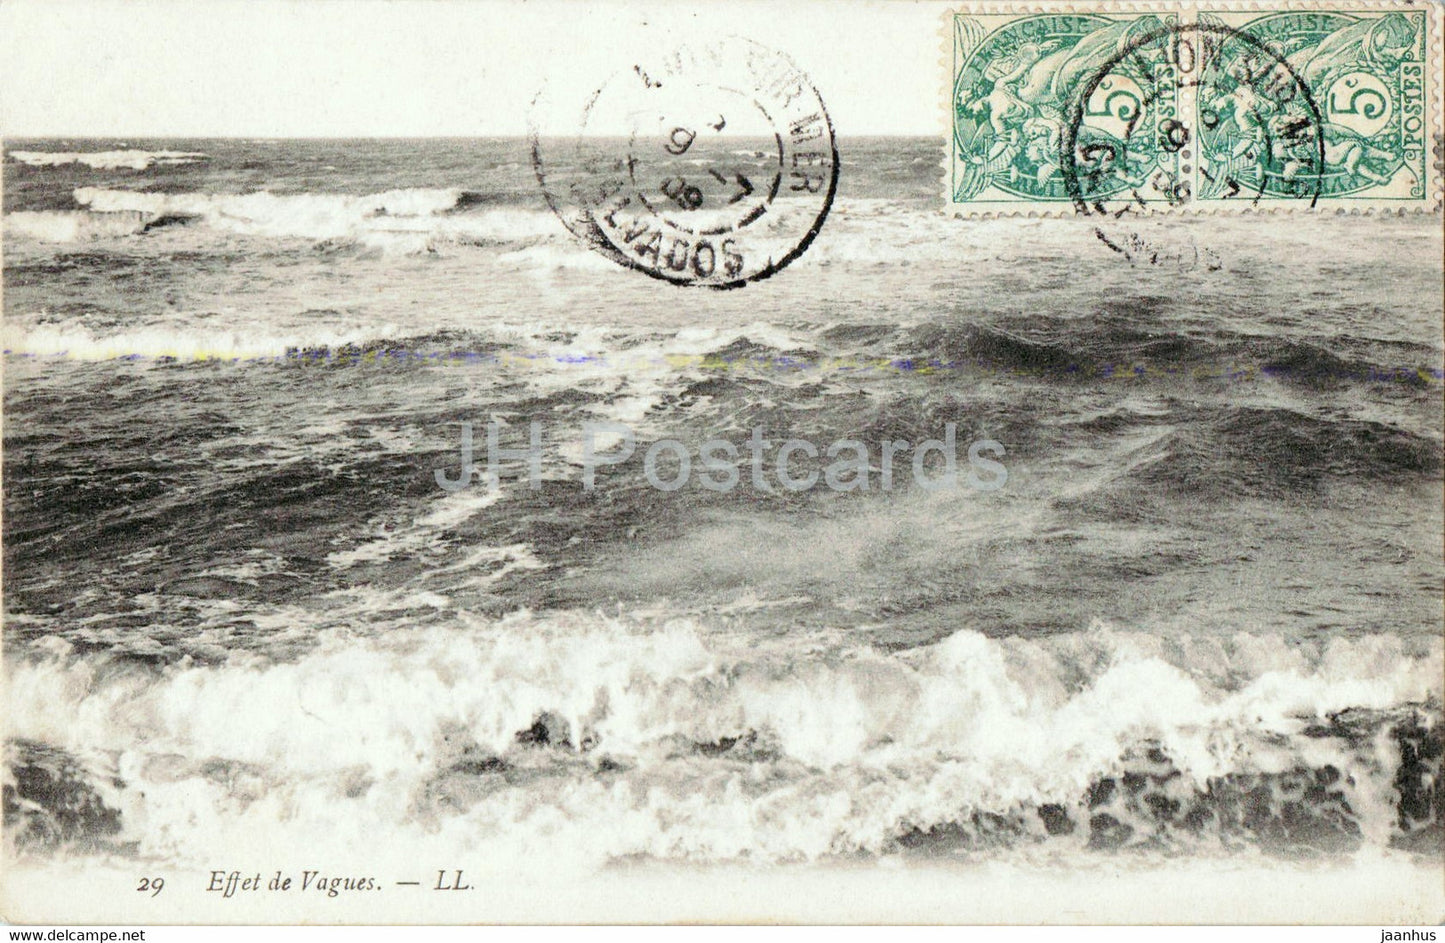 Effet de Vagues - 29 - LL - old postcard - 1909 - France - used - JH Postcards